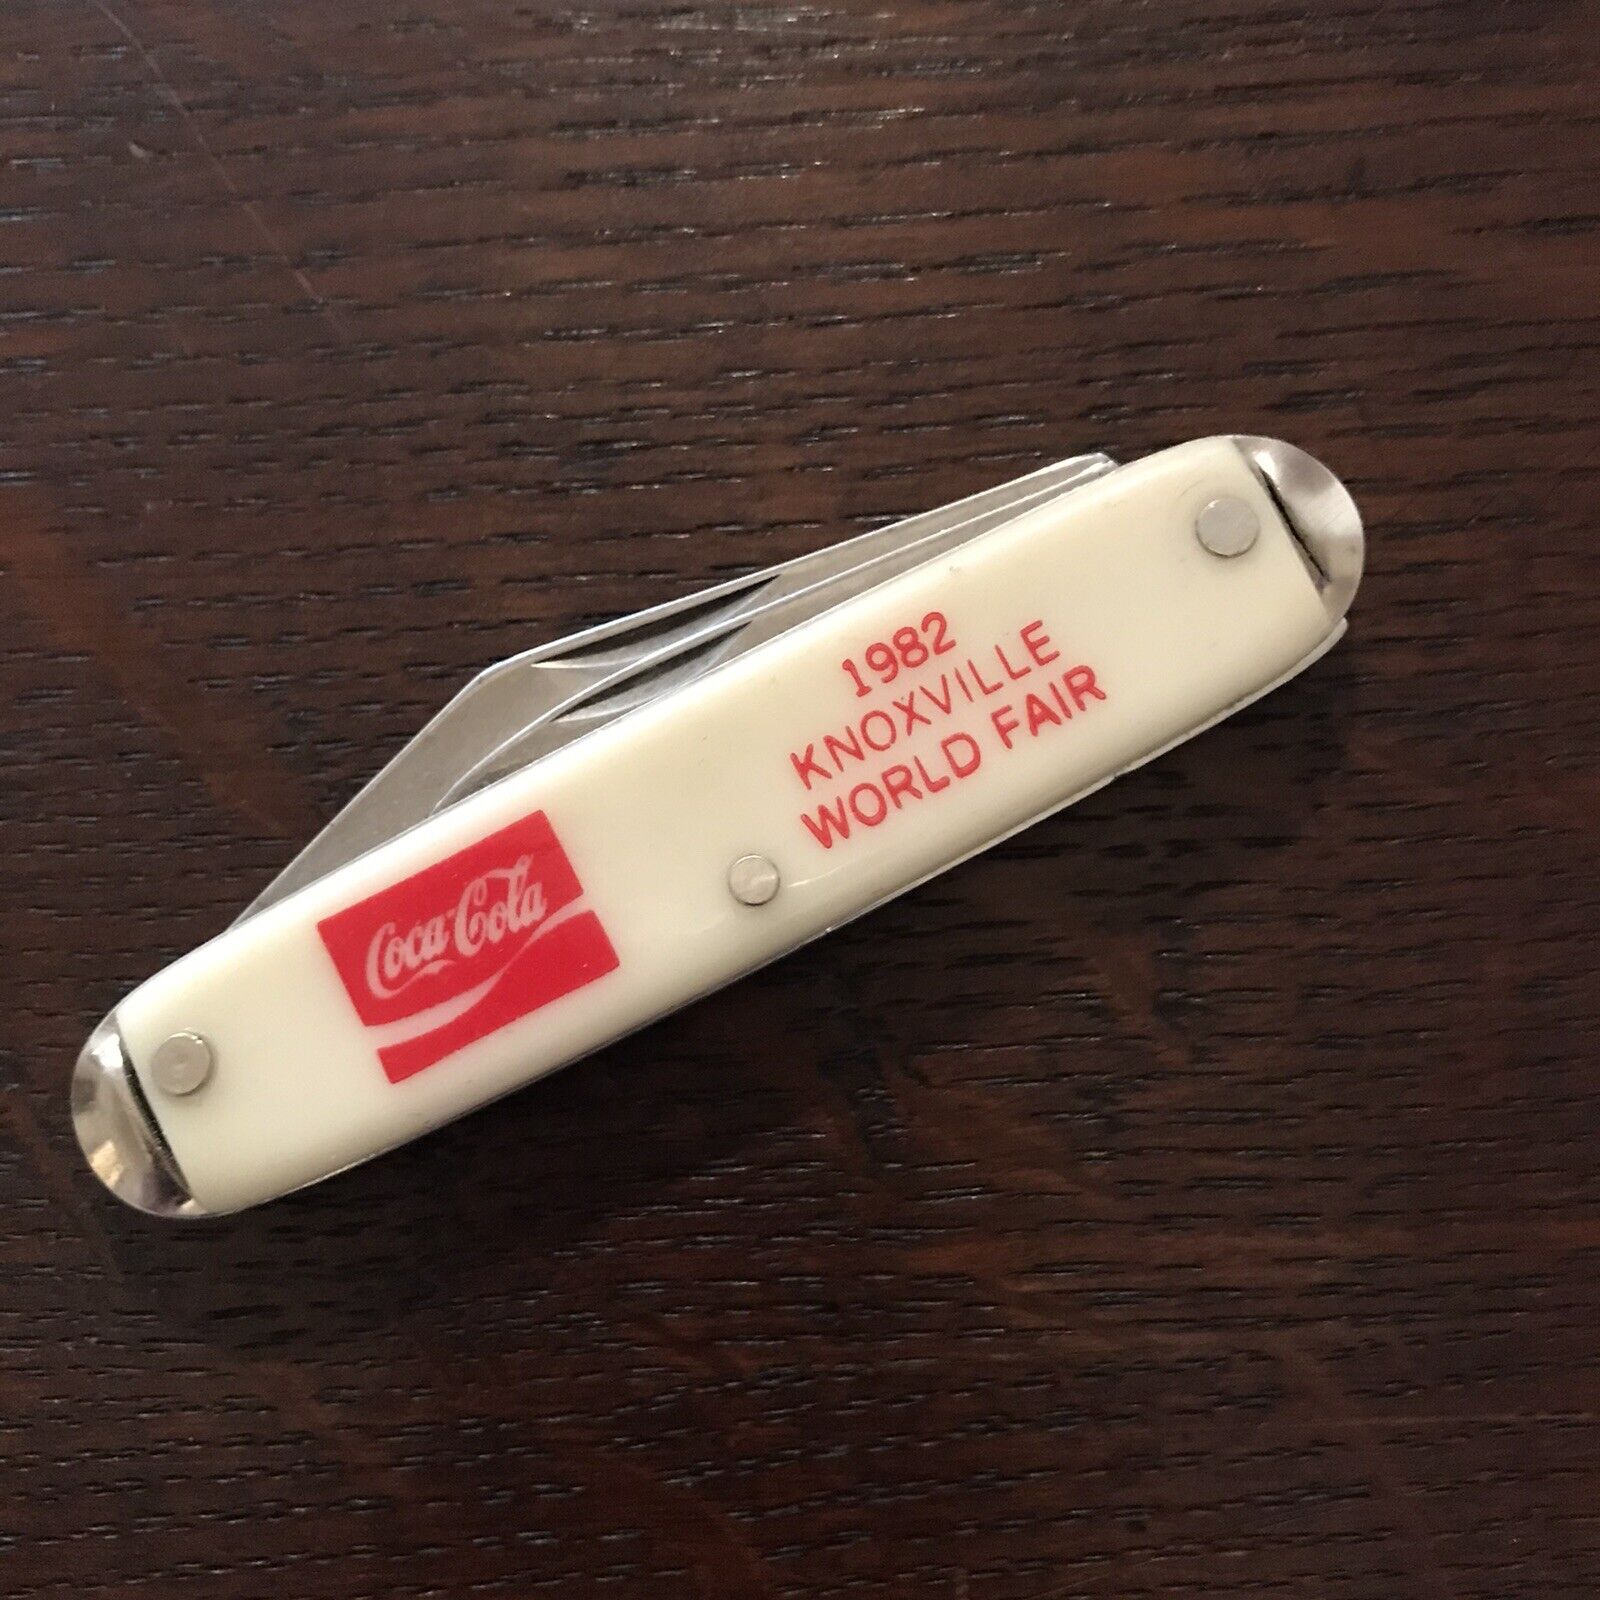 1982 World Fair Knoxville Tennessee Coca-cola Souvenir 2 Blade Pocket Knife